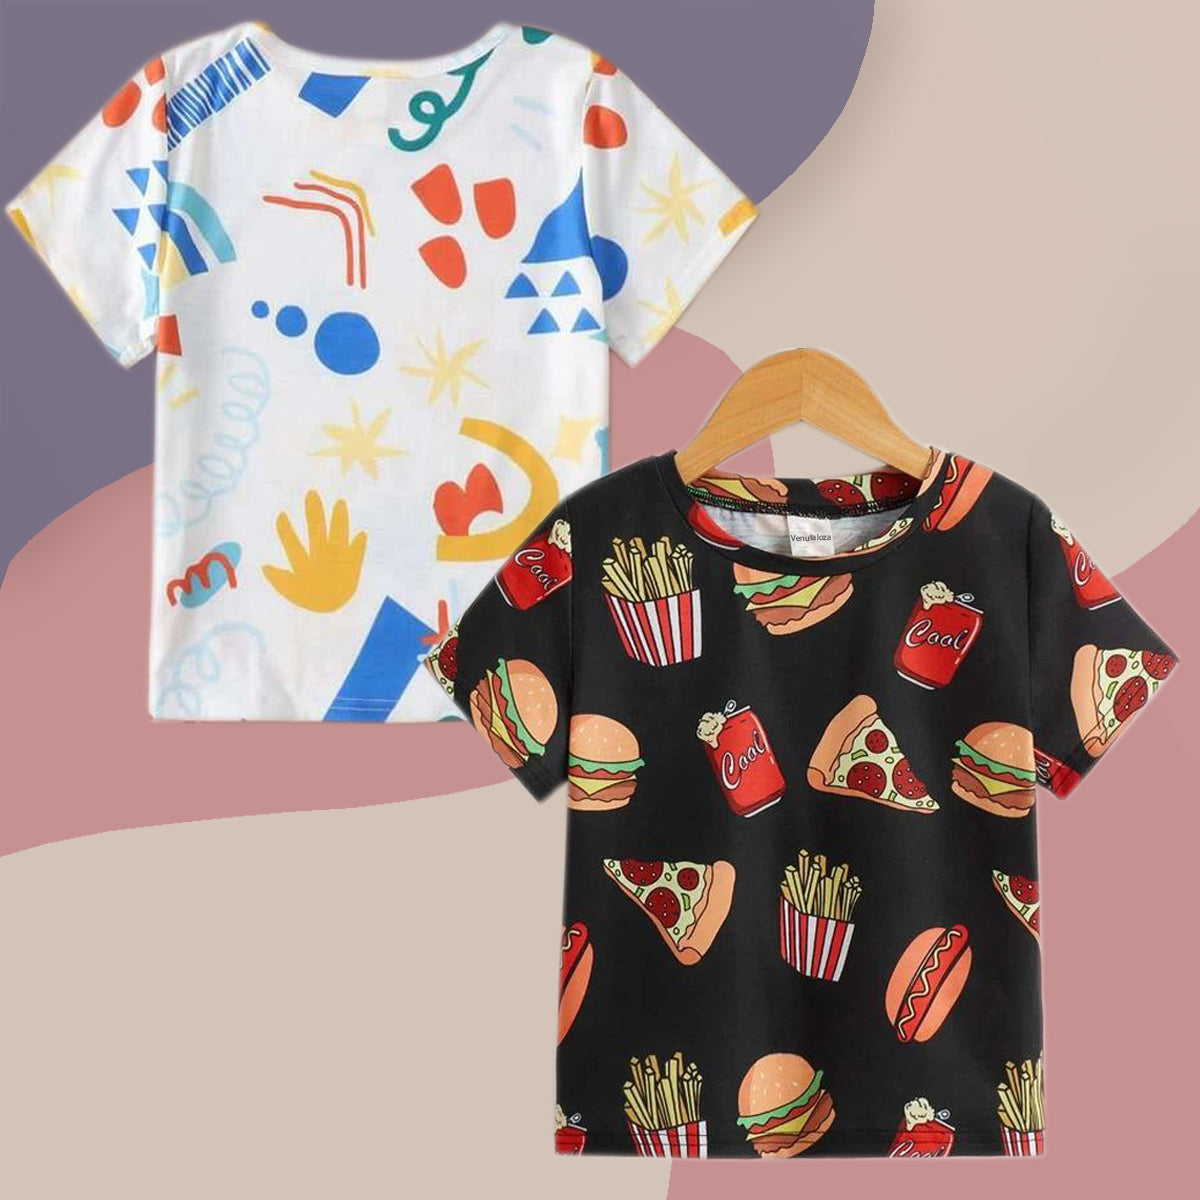 Venutaloza Boy's Food Print & Cartoon Graphic Print (Combo Pack of 2) T-shirt For Boy's.